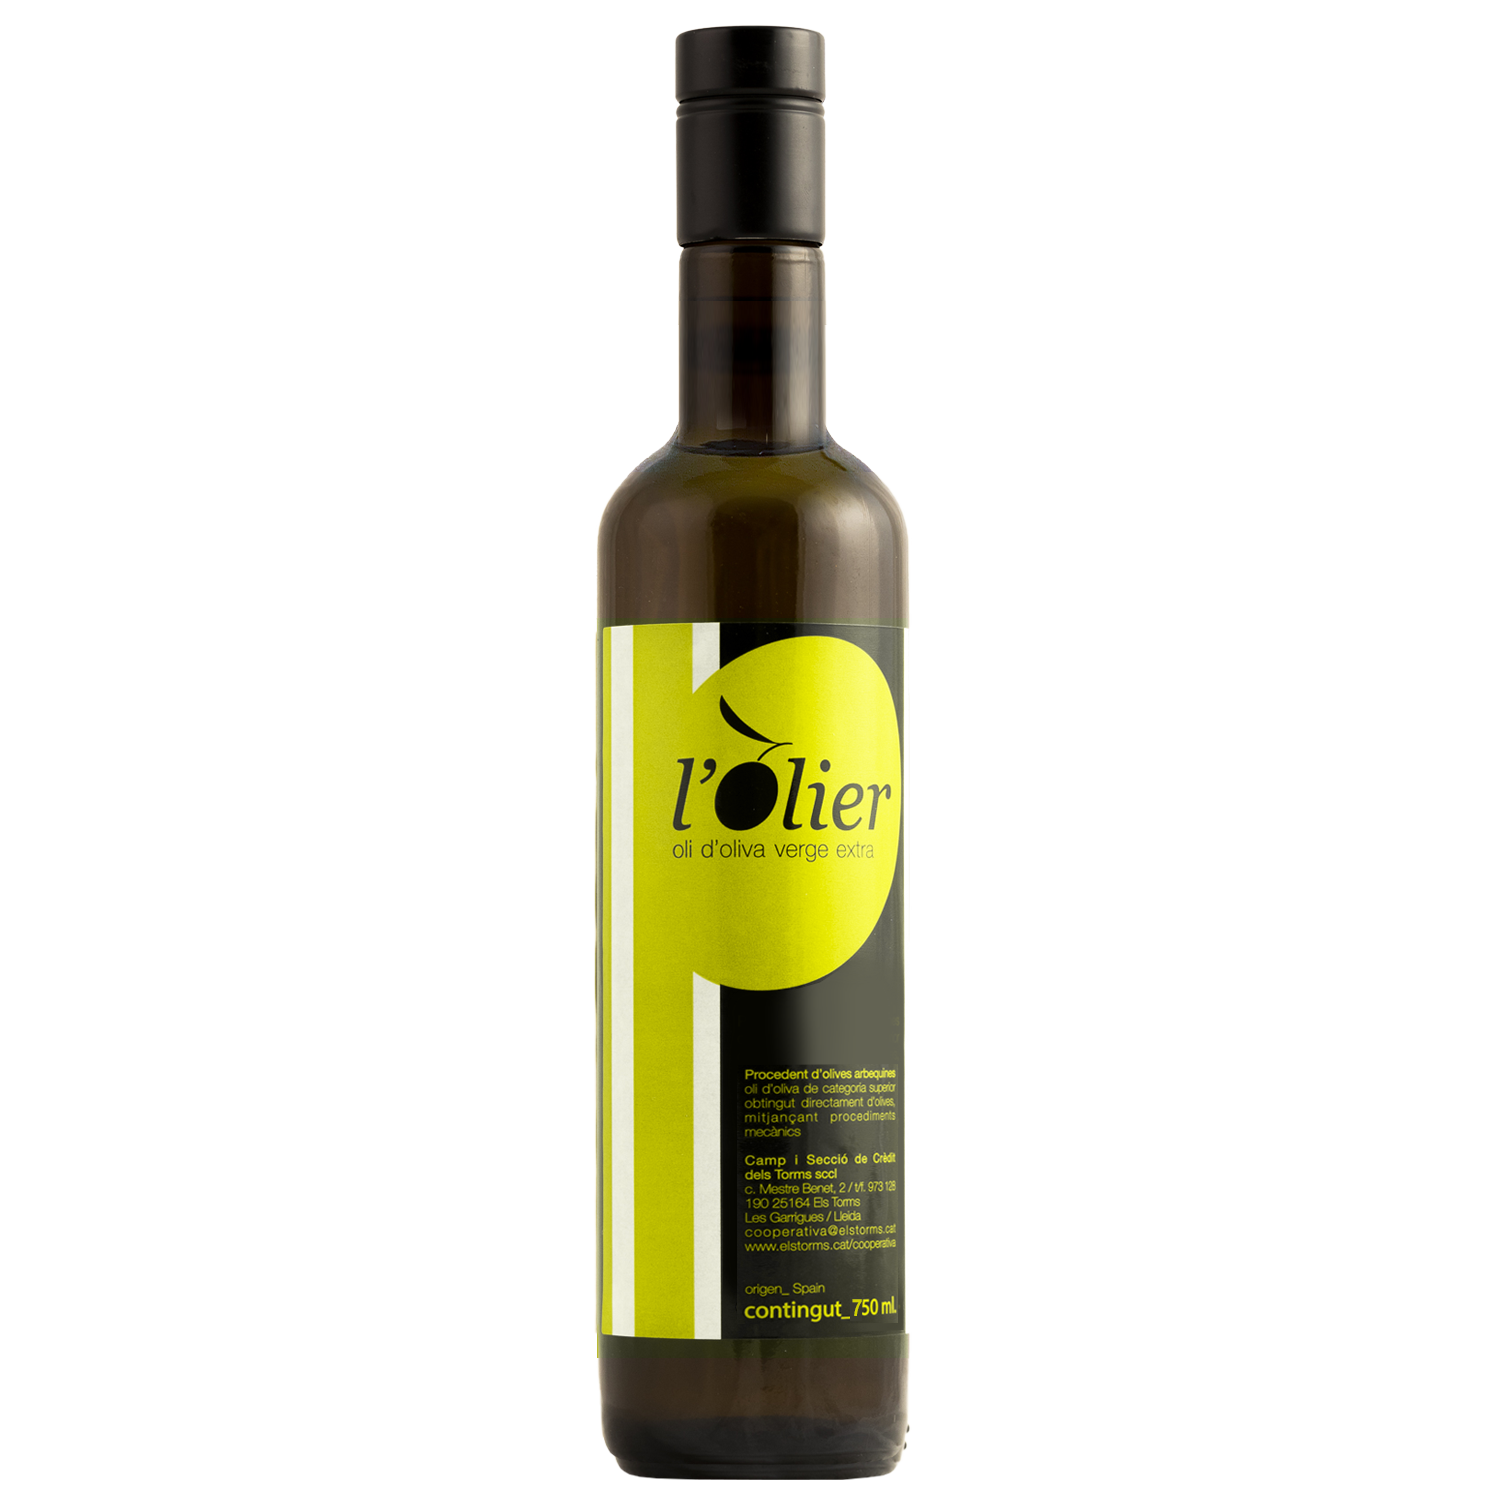 L'OLIER 750cc, Extra virgin olive oil